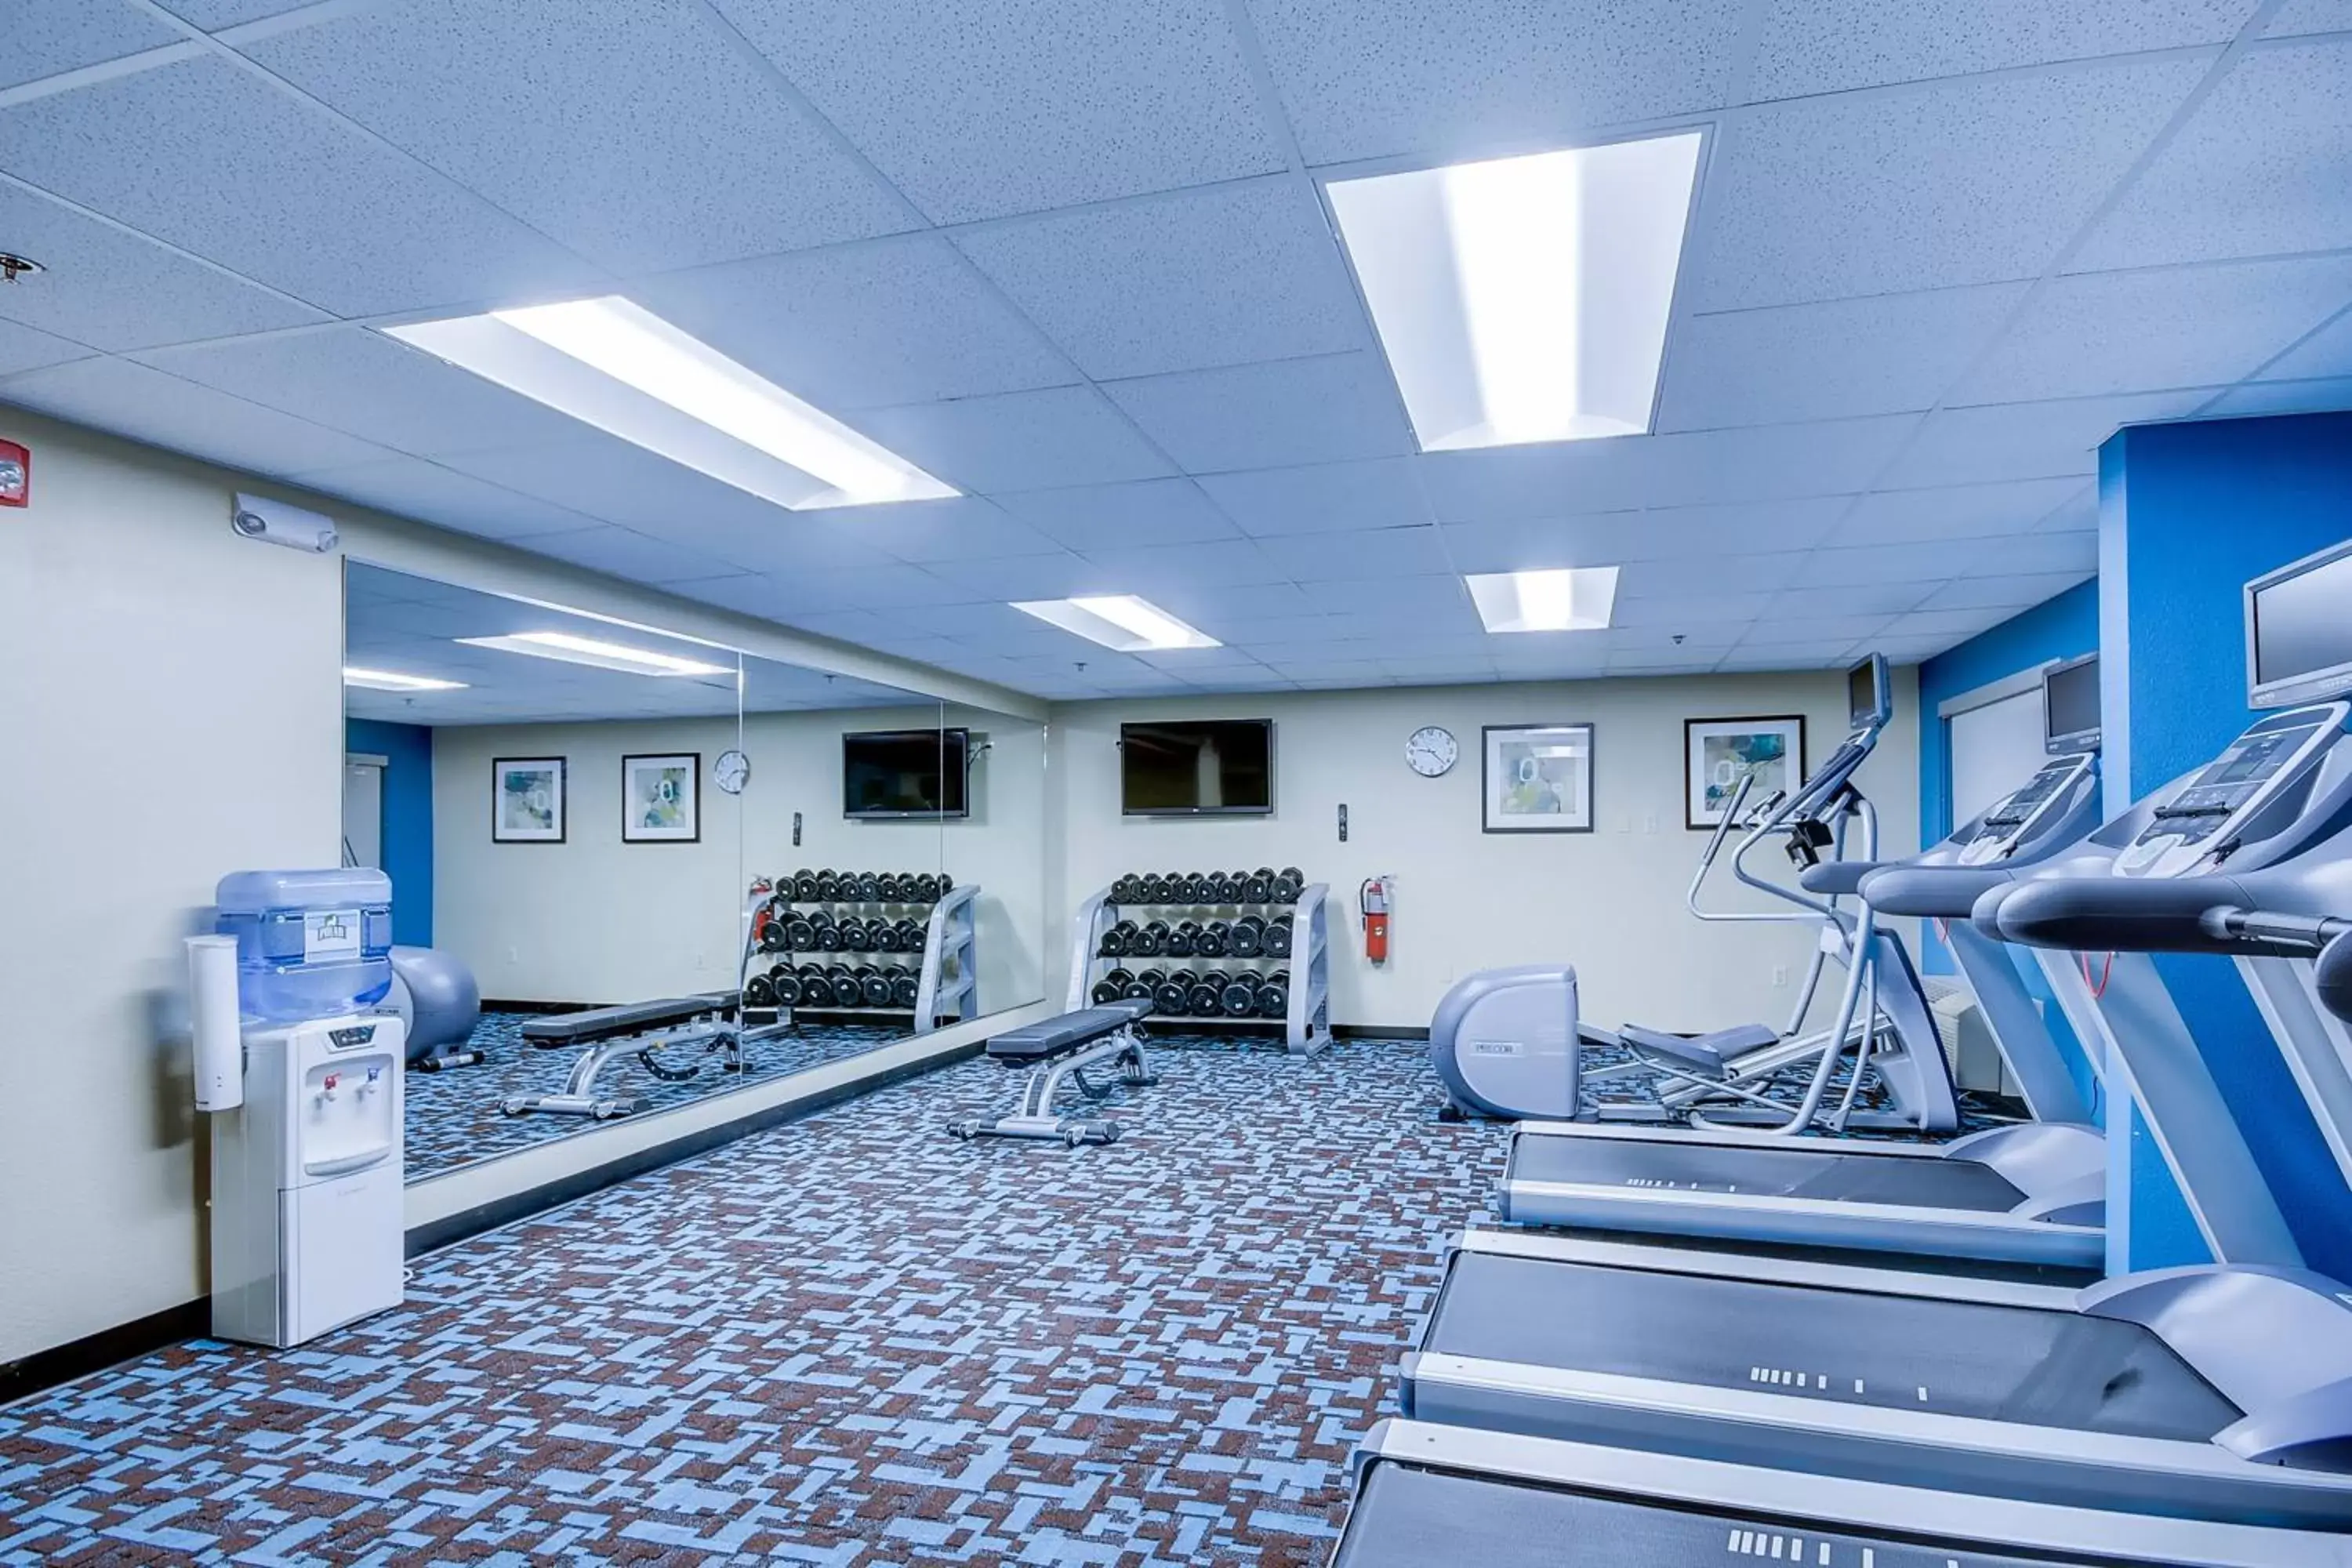 Fitness centre/facilities, Fitness Center/Facilities in Fairfield Inn Boston Woburn